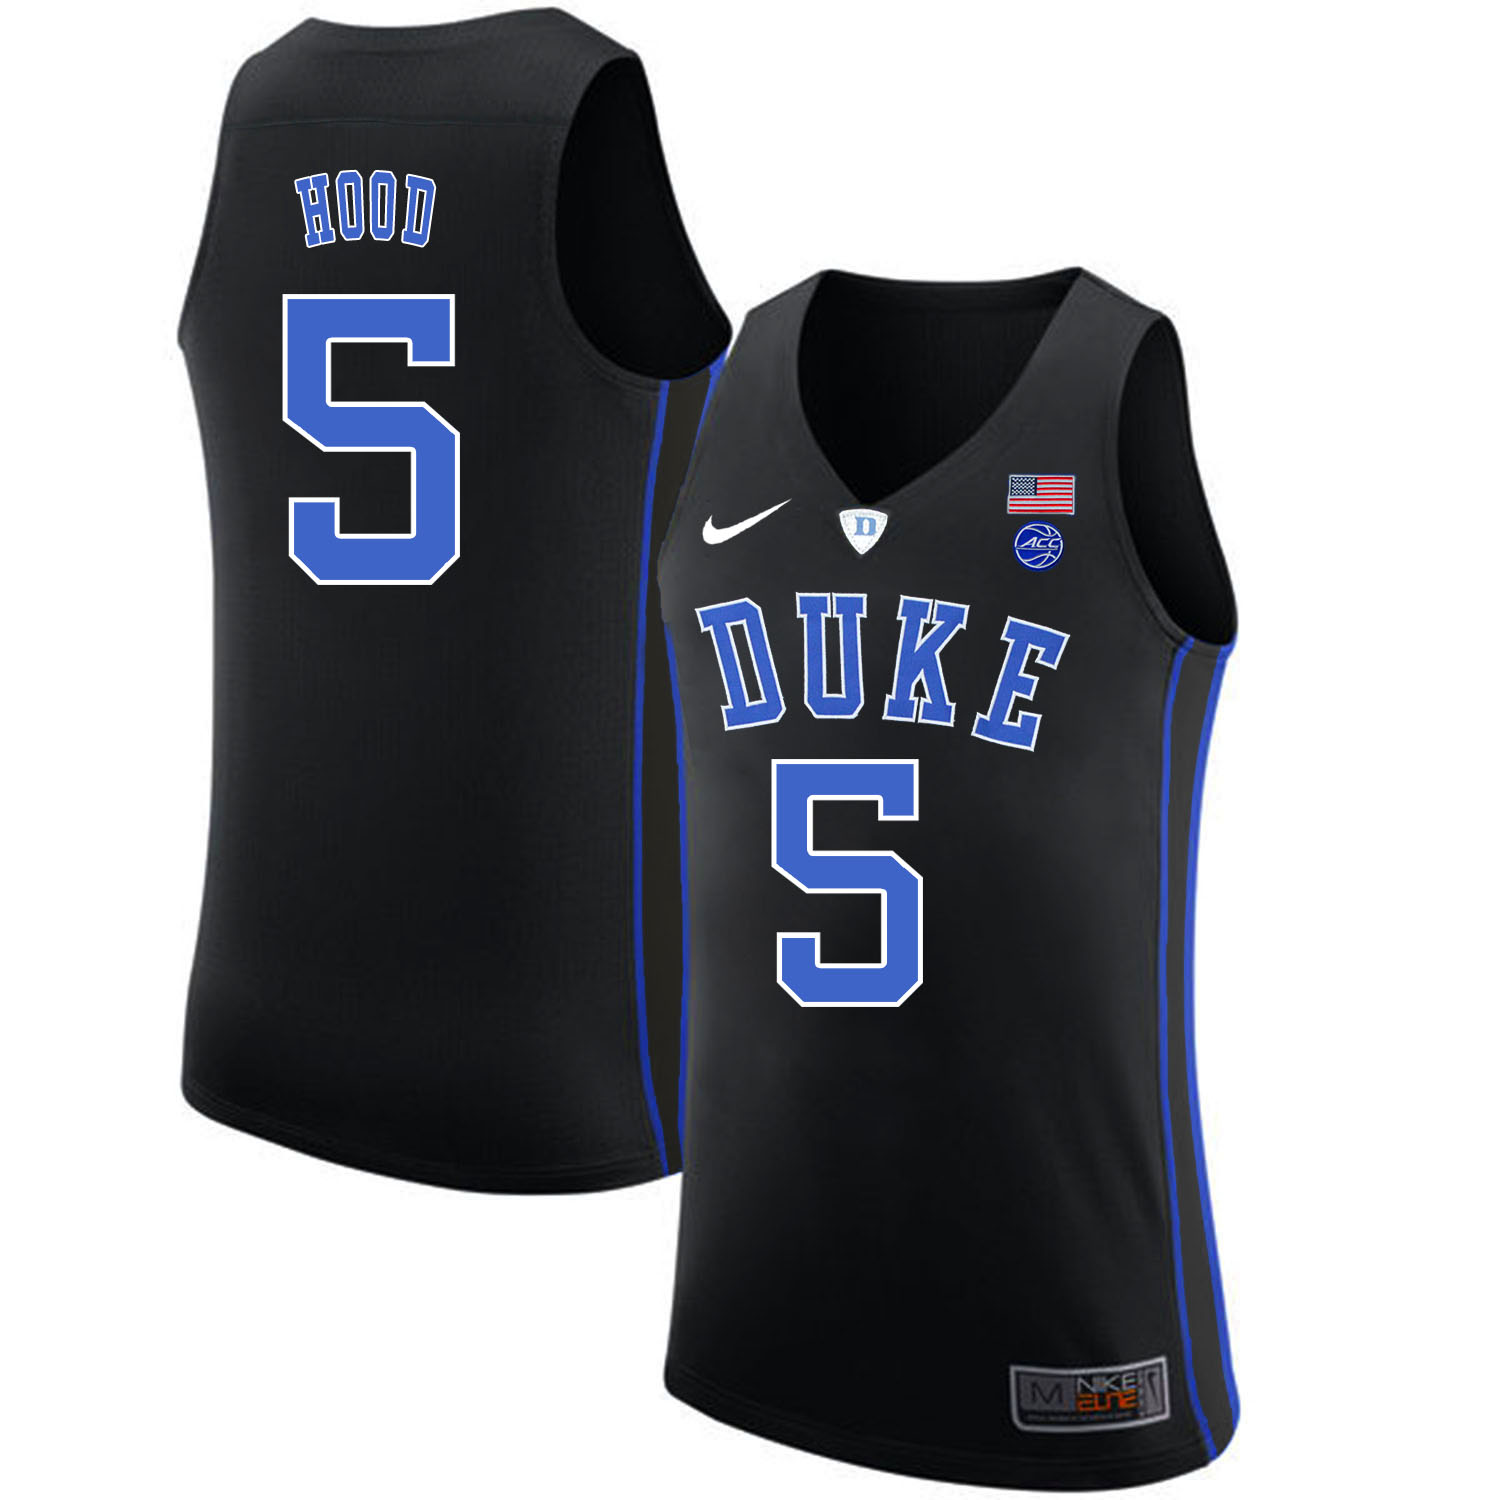 Duke Blue Devils 5 Rodney Hood Black Nike College Basketball Jersey